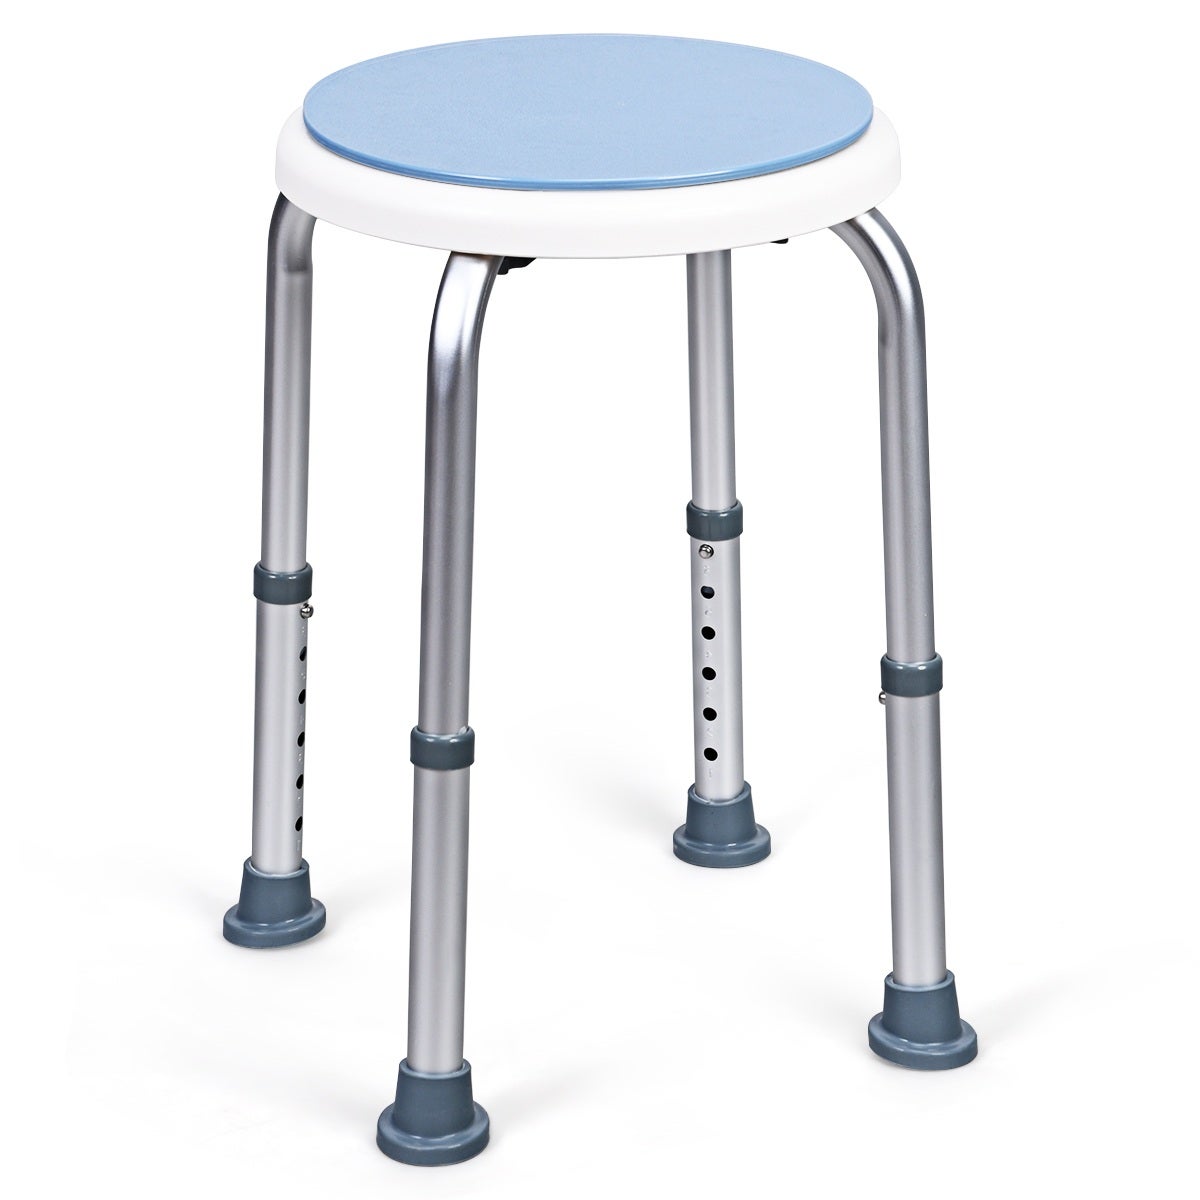 Costway 360° Rotating Shower Stool Height Adjustable Bath Chair Aluminum Senior Elderly Bathroom w/Anti-Slip Rubber